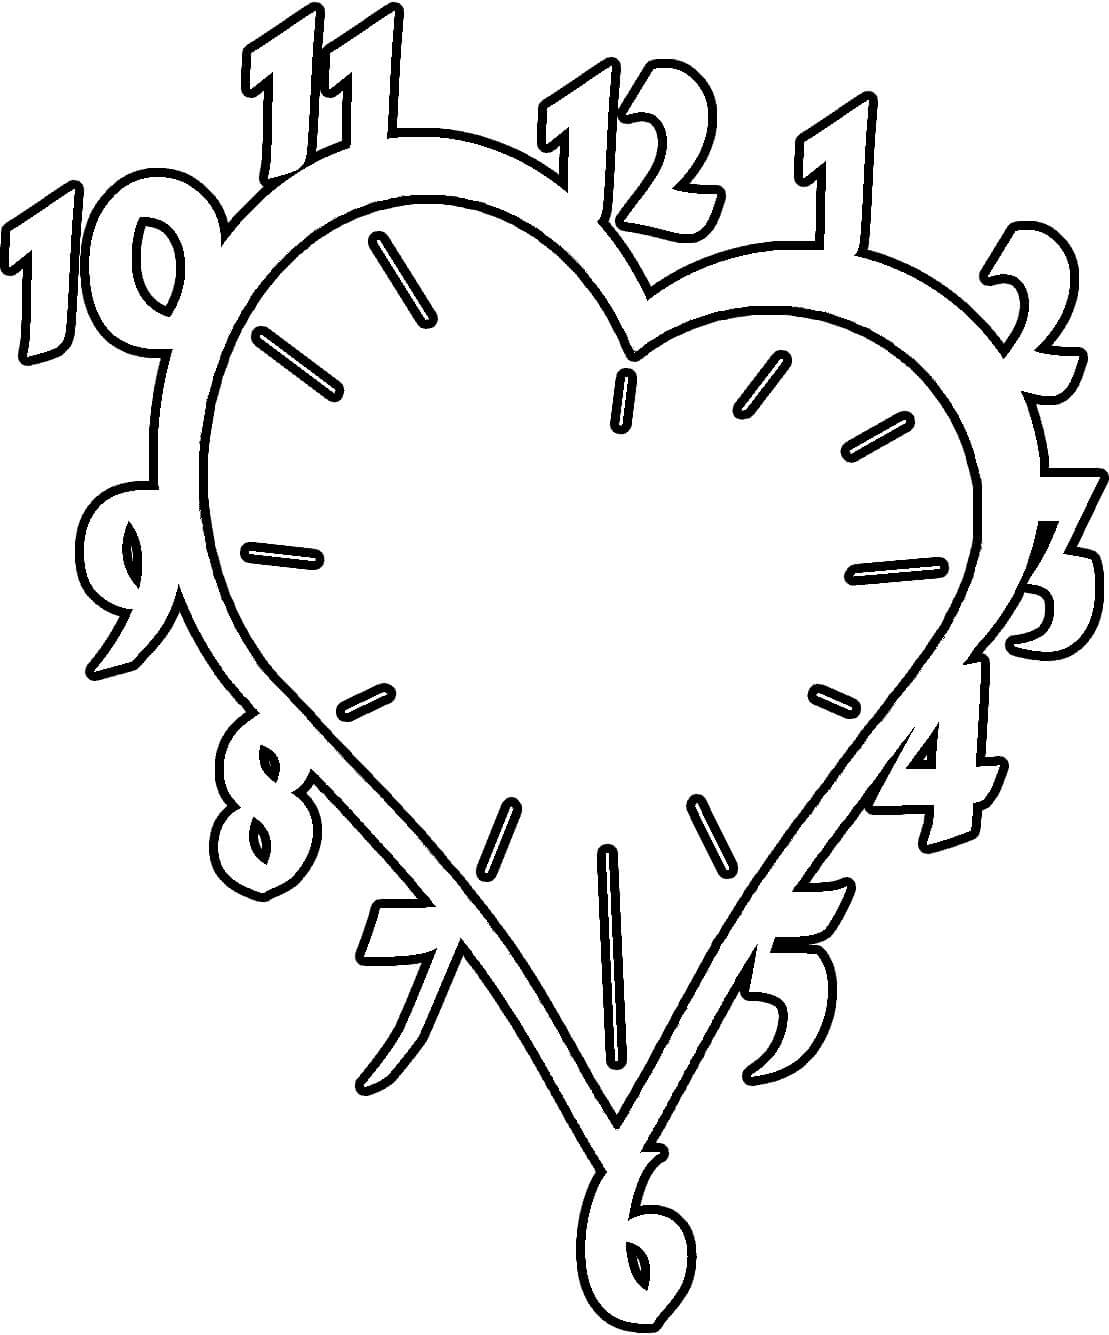 Desenhos de Relógio Cardíaco para colorir